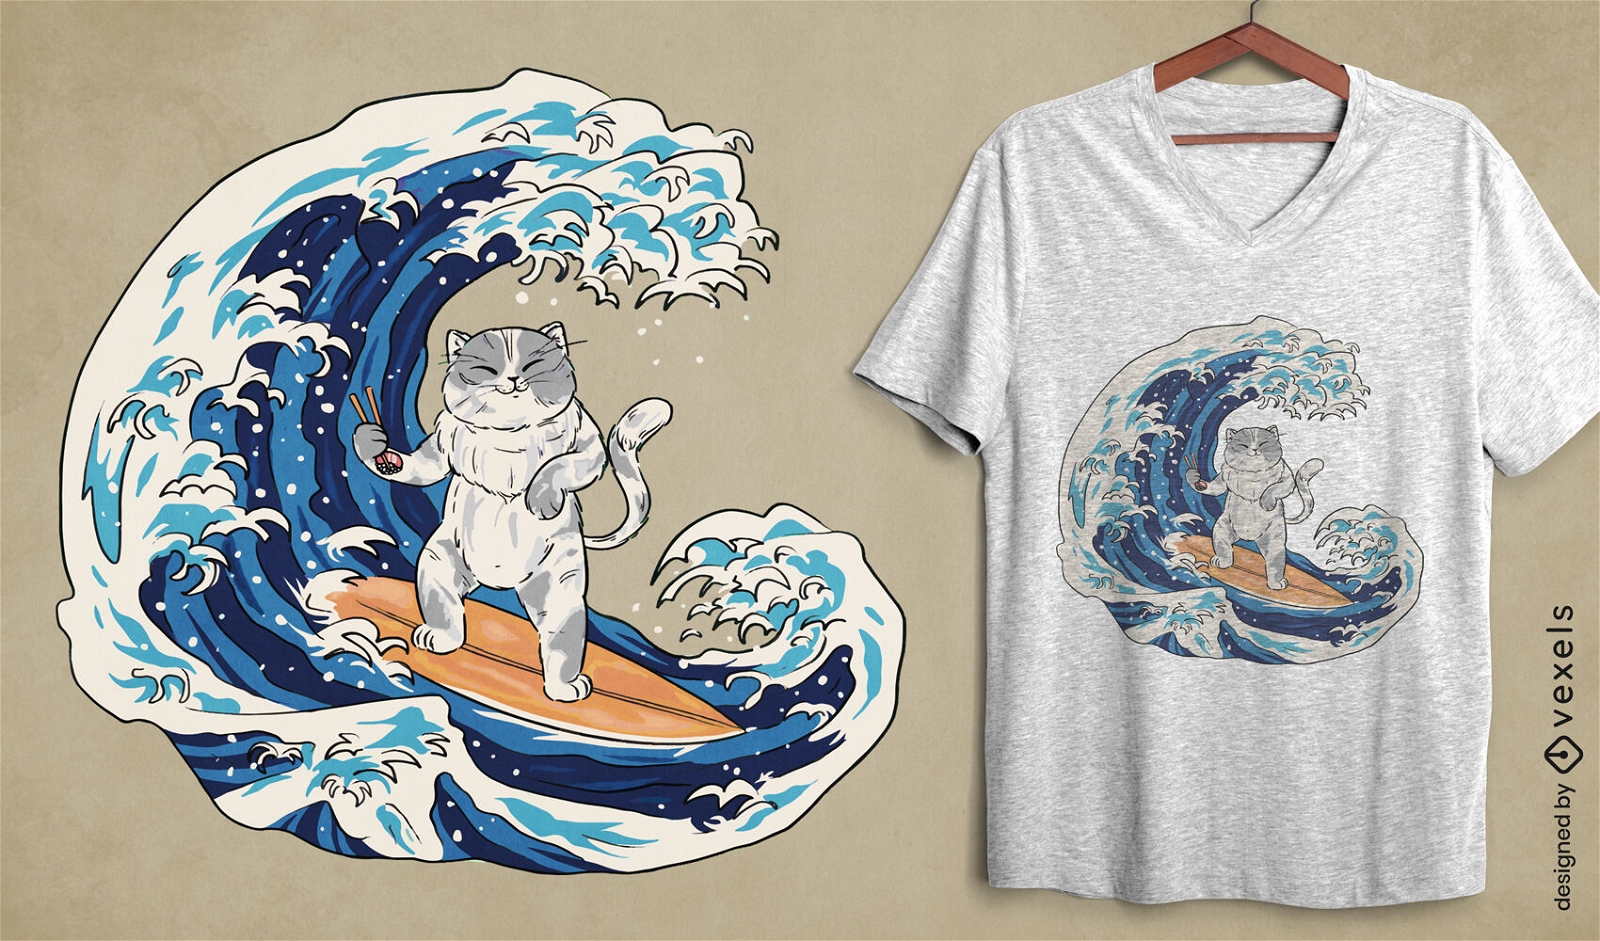 Japanese wave surfing cat t-shirt design